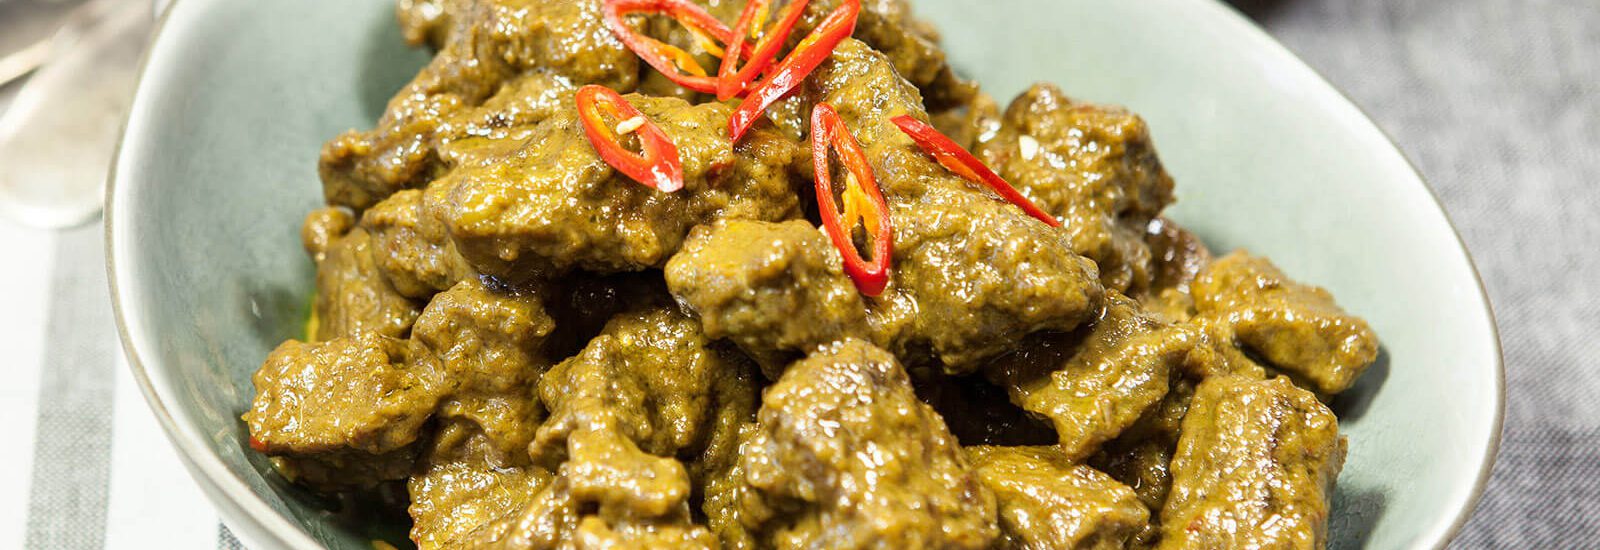 Rendang beef curry